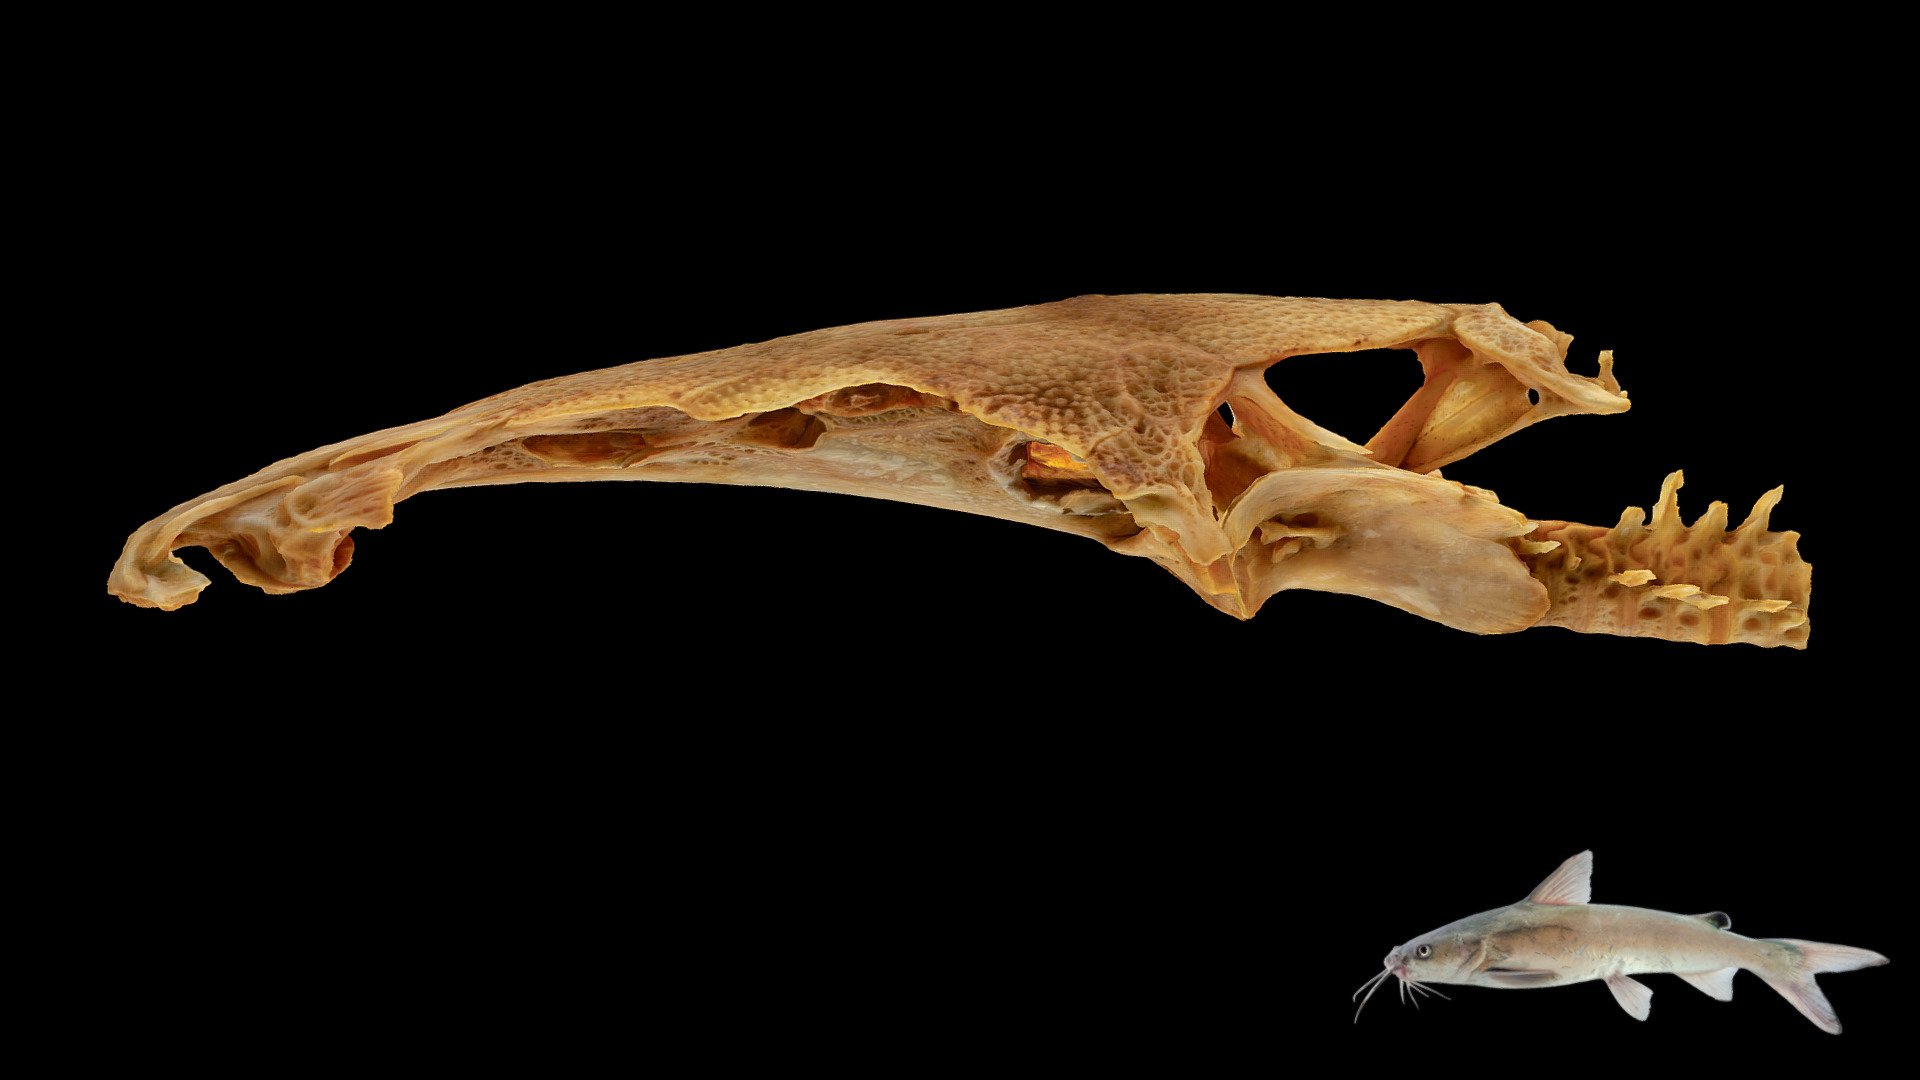 Hardhead Catfish Skull Neurocranium 3d Model By Blackburn Lab Ufherps